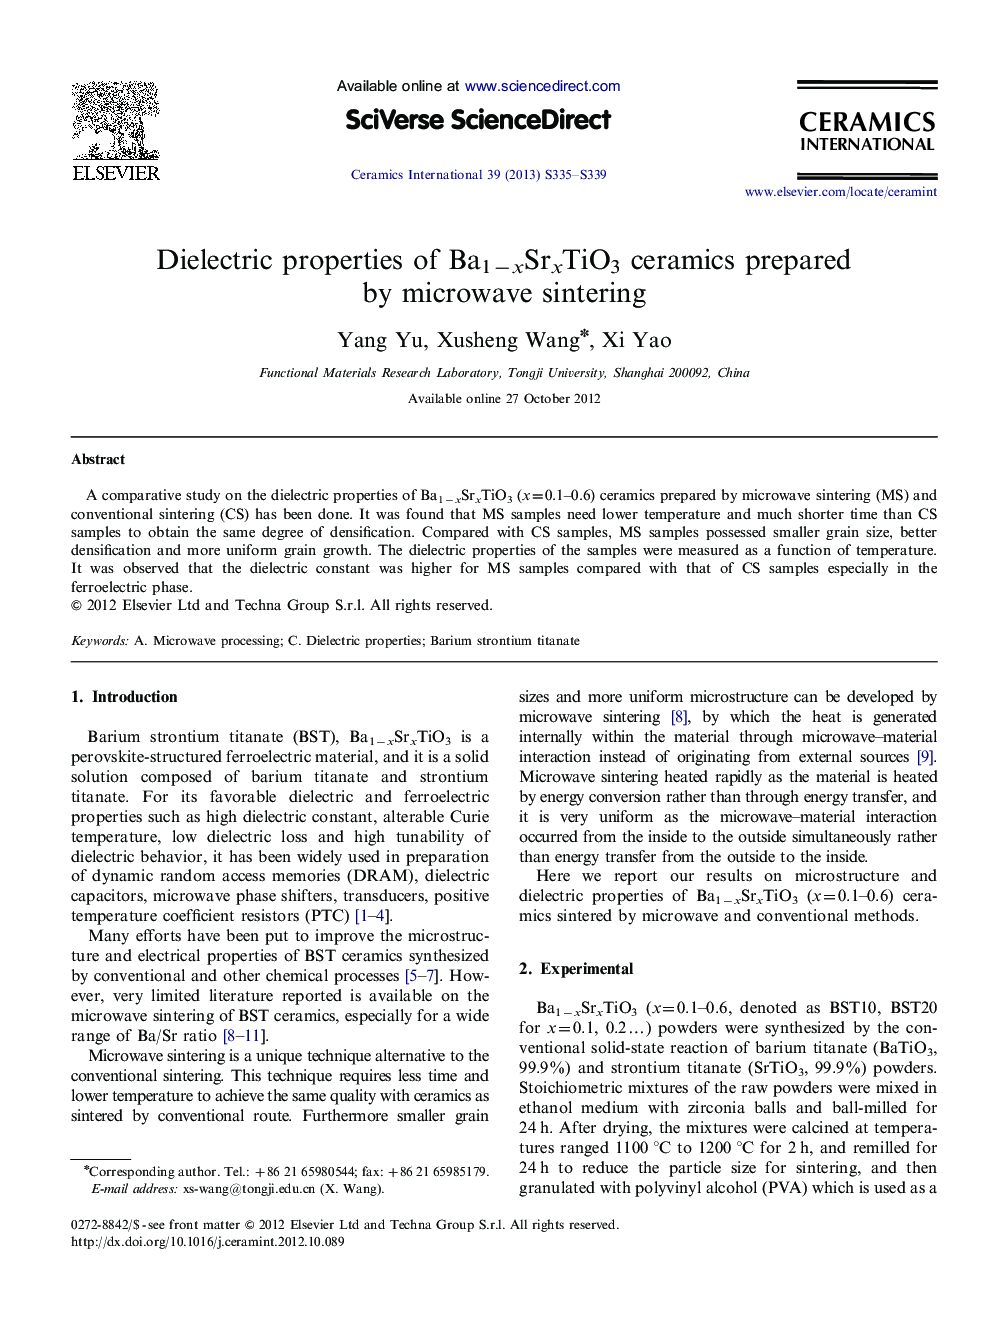 Dielectric properties of Ba1−xSrxTiO3 ceramics prepared by microwave sintering